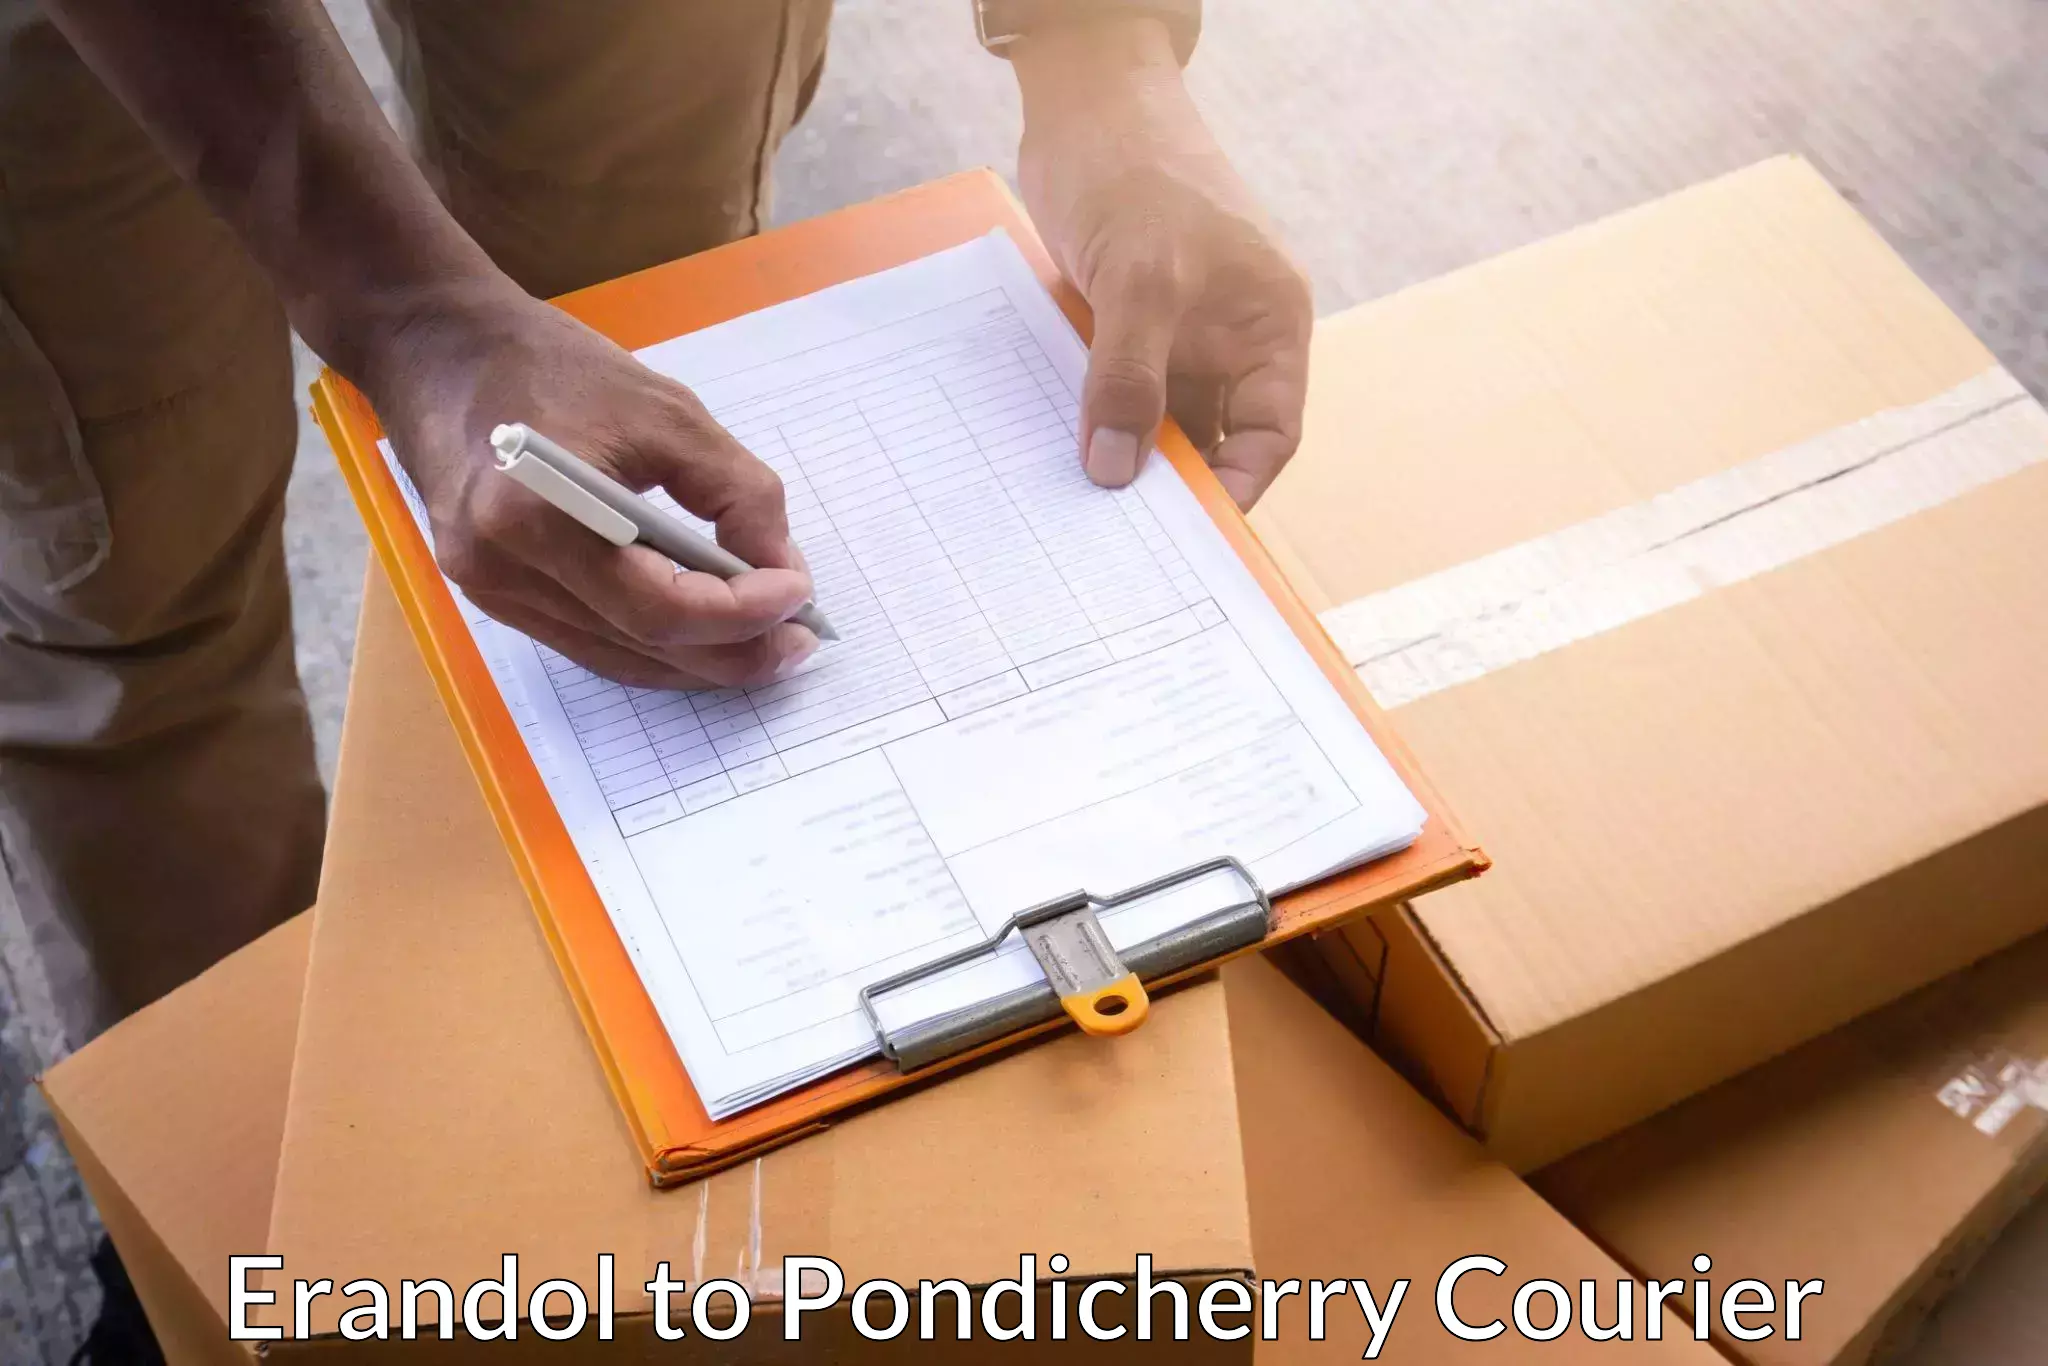 Bulk courier orders Erandol to Pondicherry